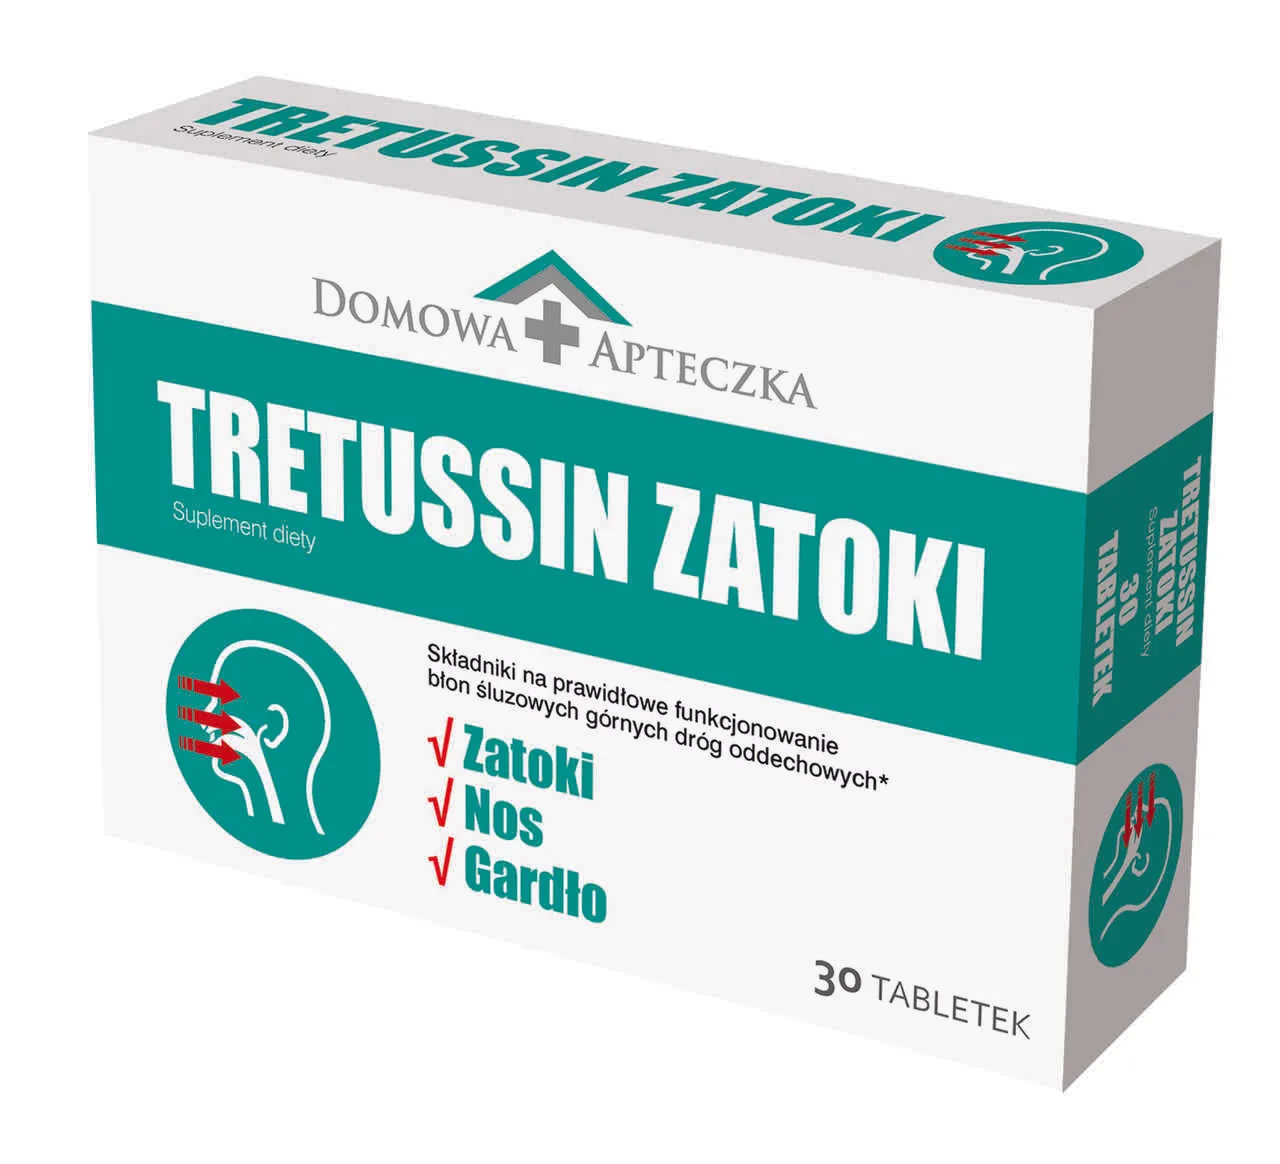 Domowa Apteczka Tretussin Zatoki, suplement diety, 30 tabletek